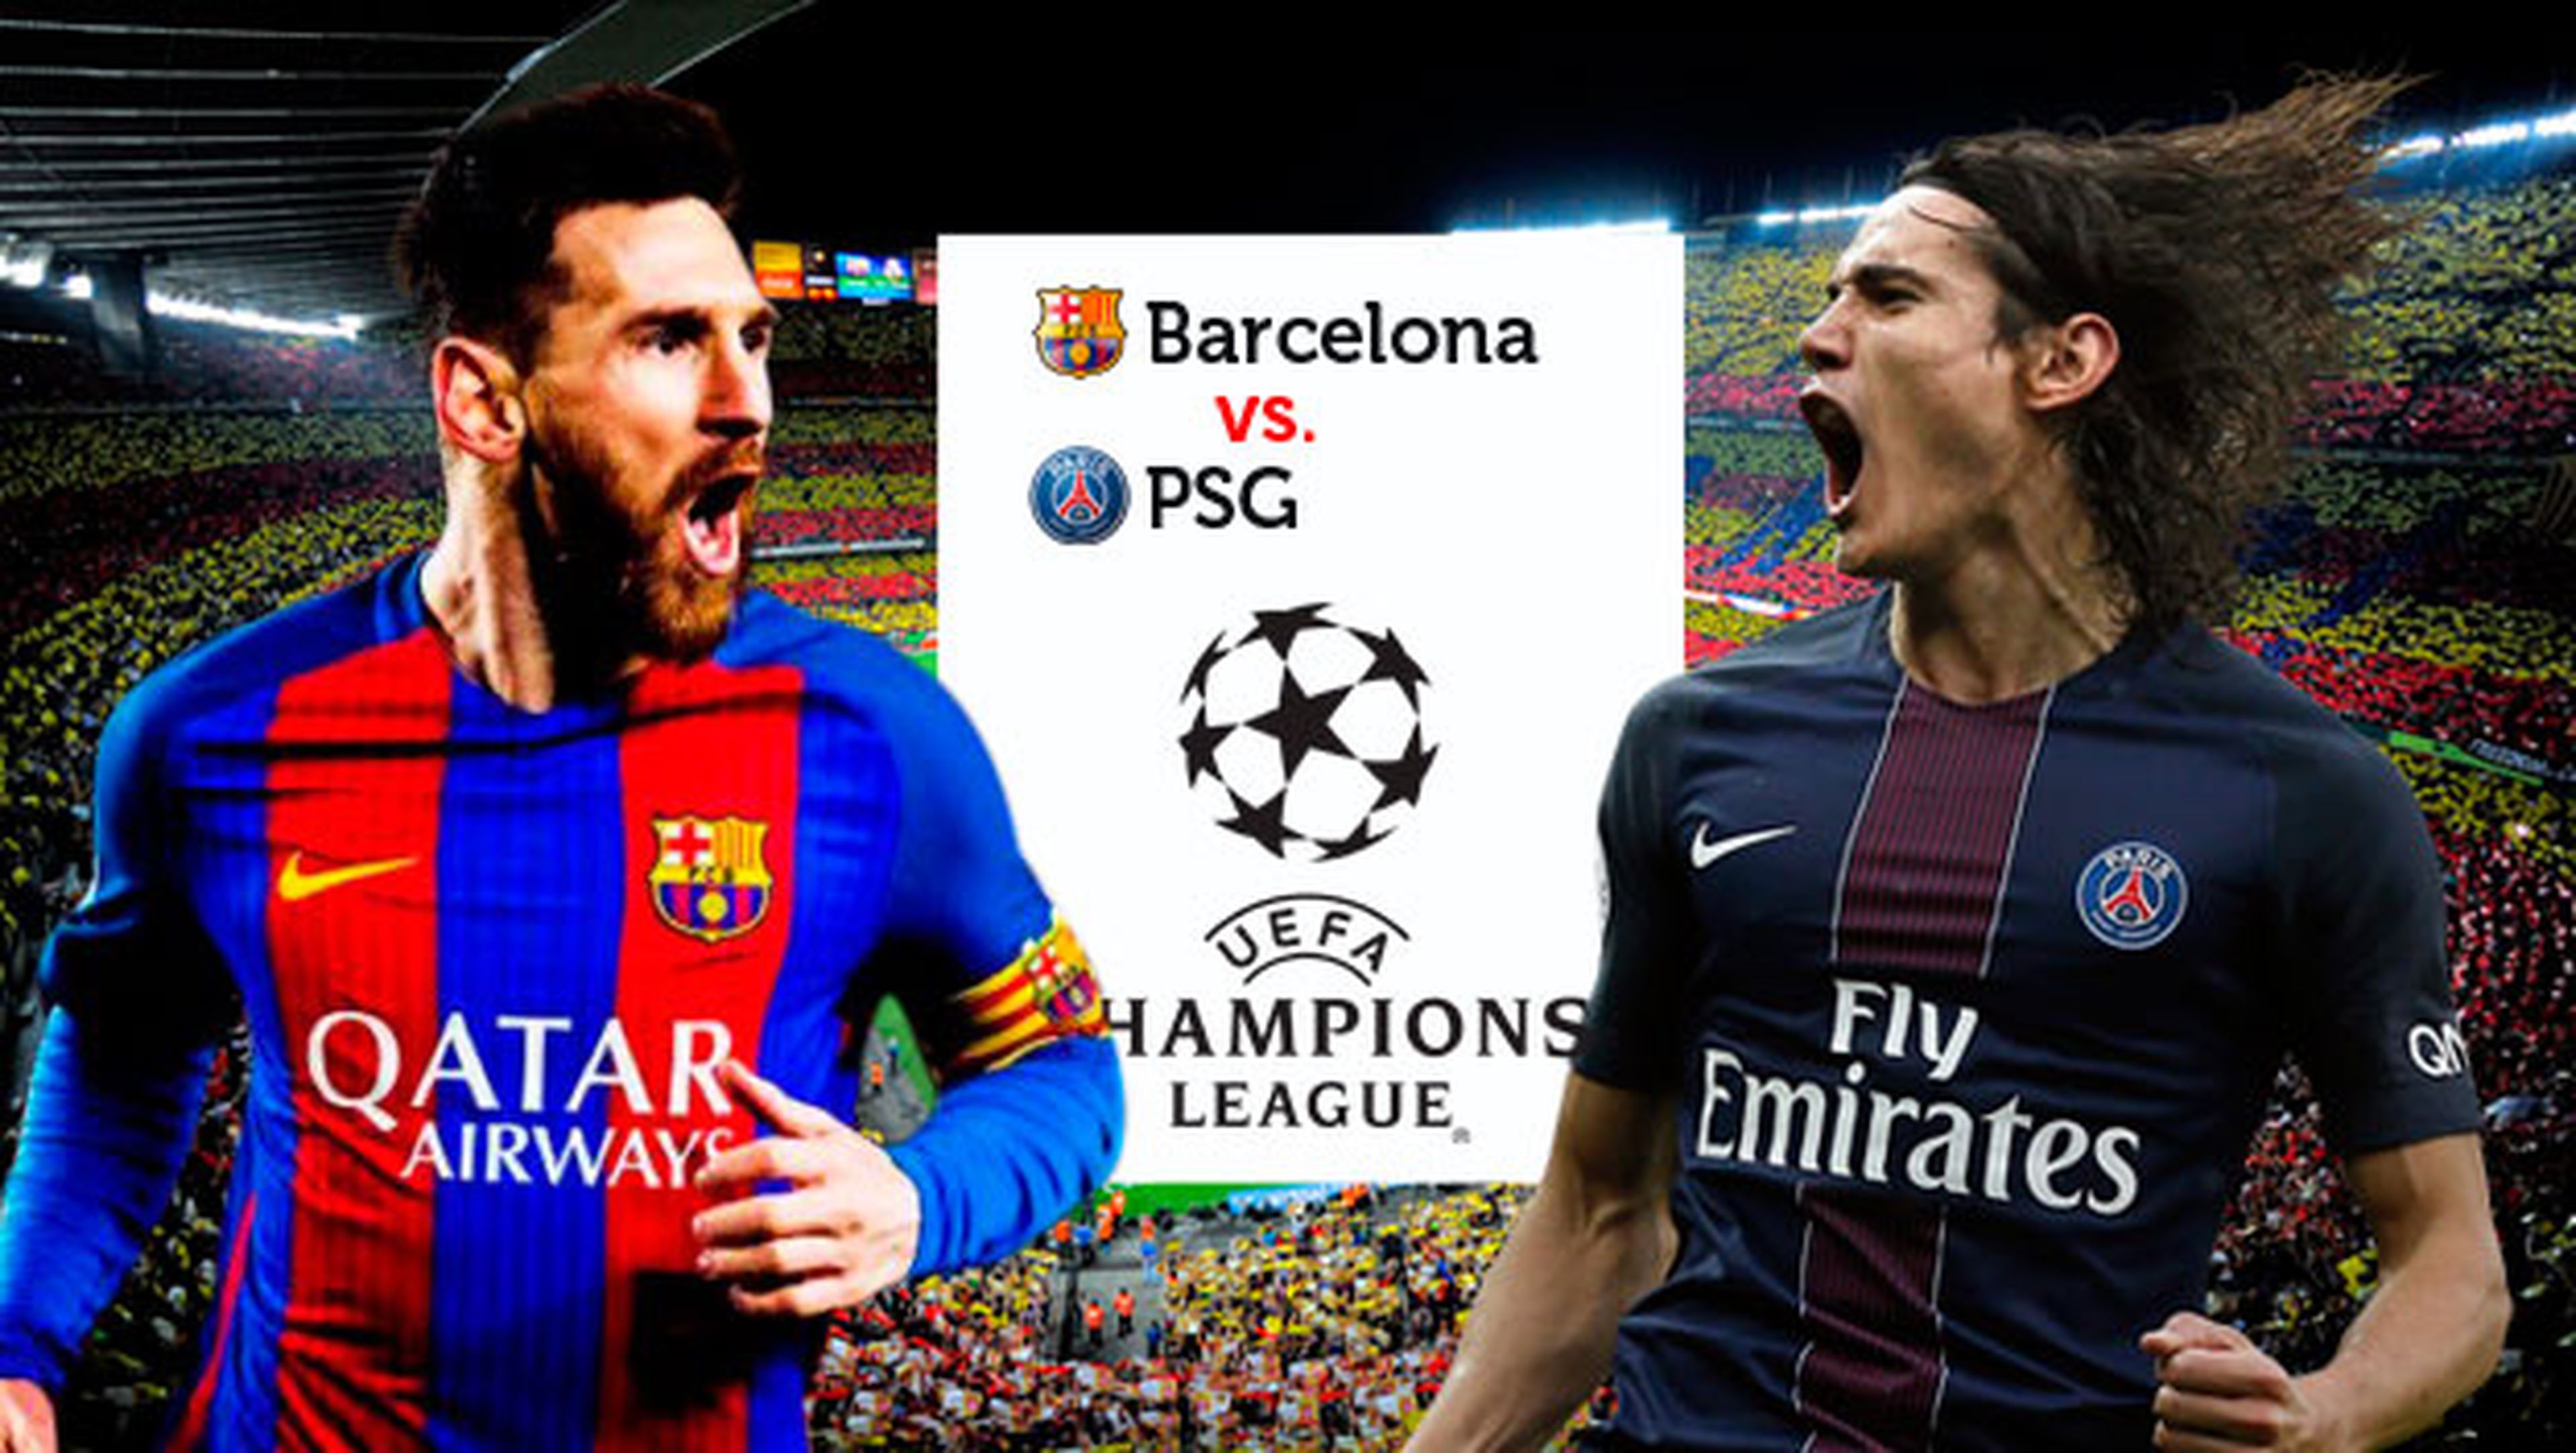 ver champions online, ver barcelona vs psg, como ver barça psg, barcelona psg directo, barcelona psg online